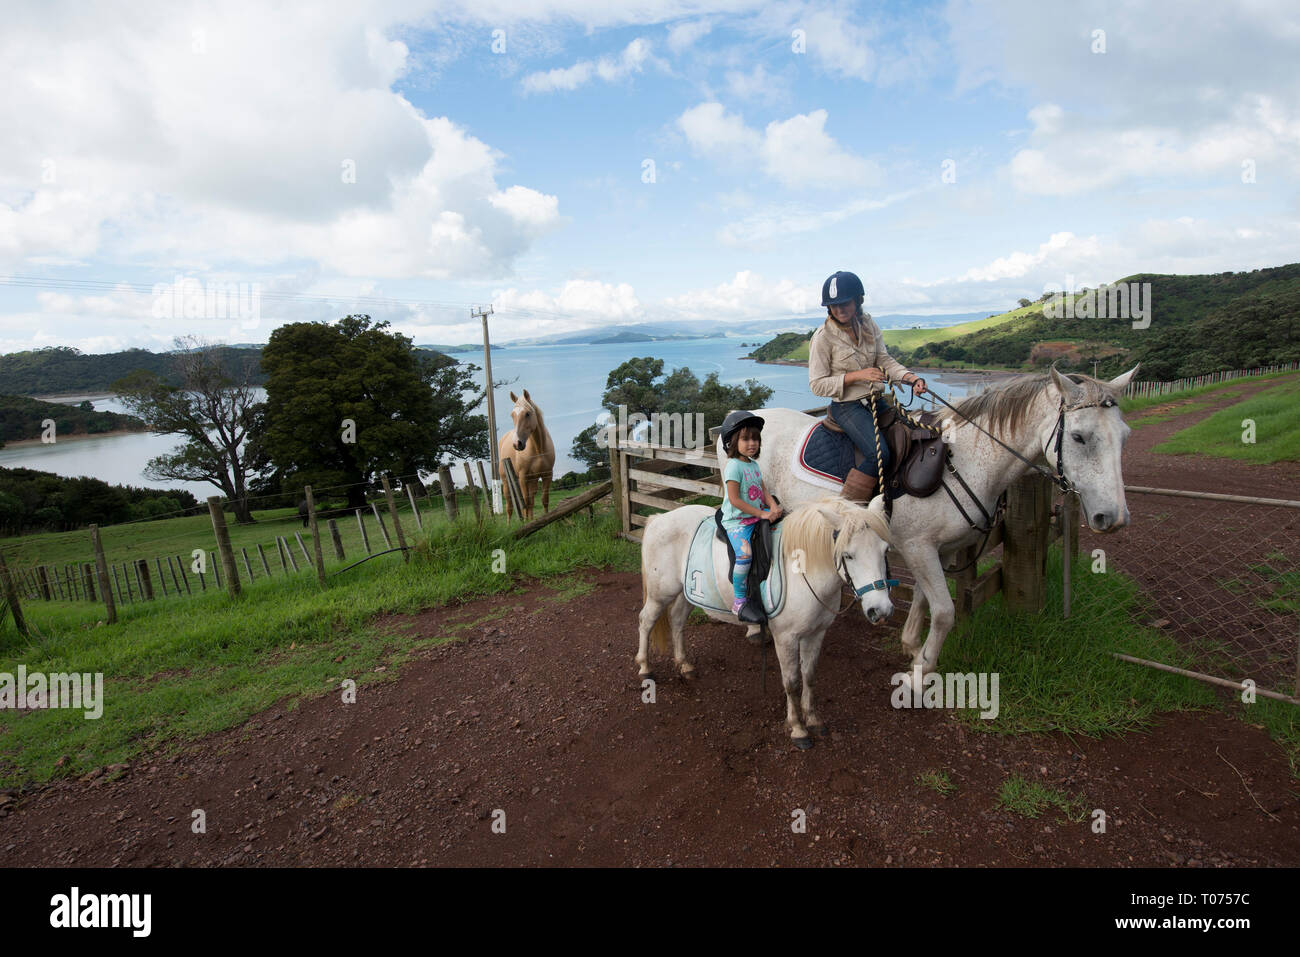 Horseriding, mother and daughter on horse, Equus ferus caballus, Waiheke Island, near Aukland, North Island, New Zealand Stock Photo